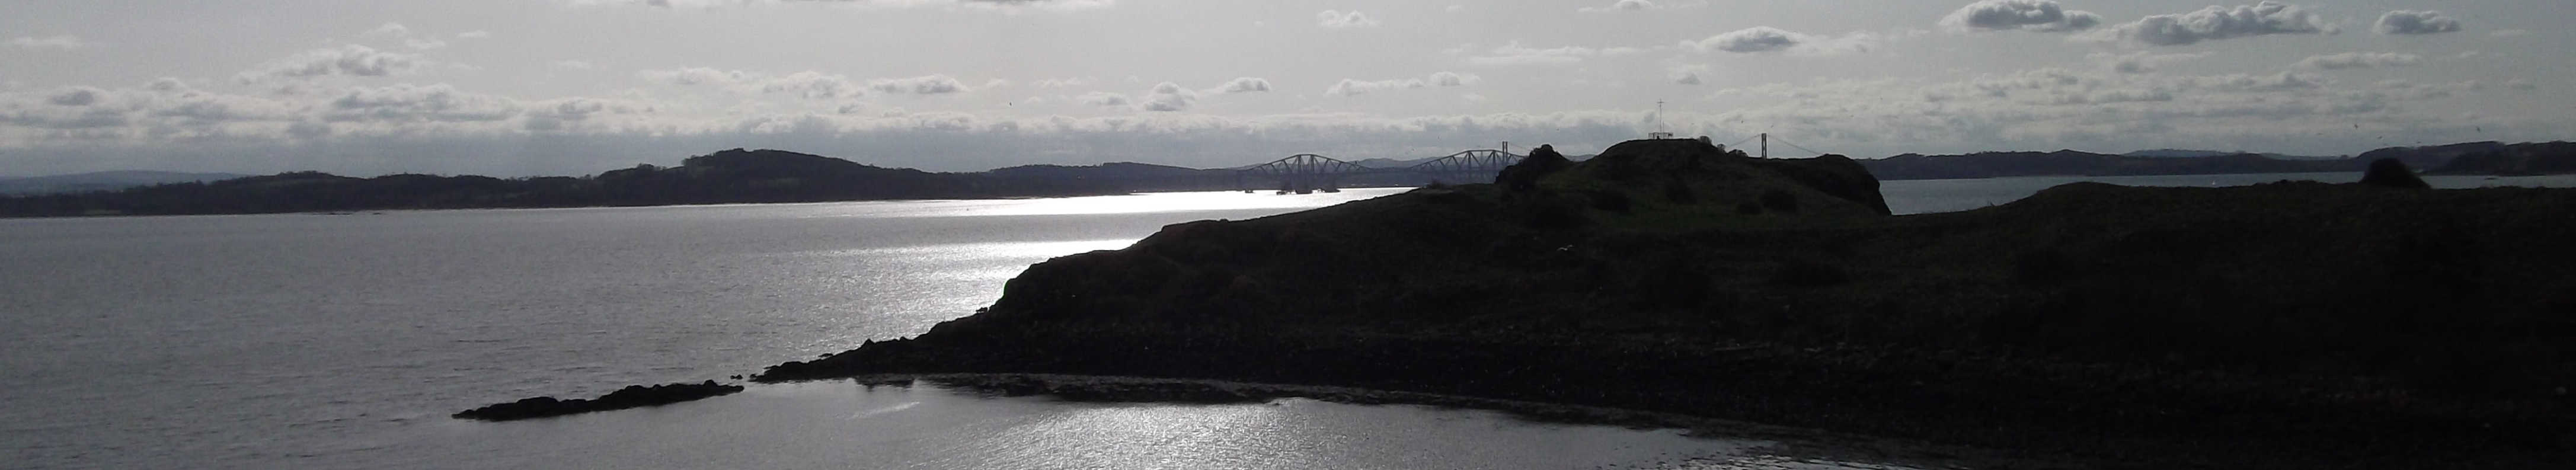 Incholme Island view.